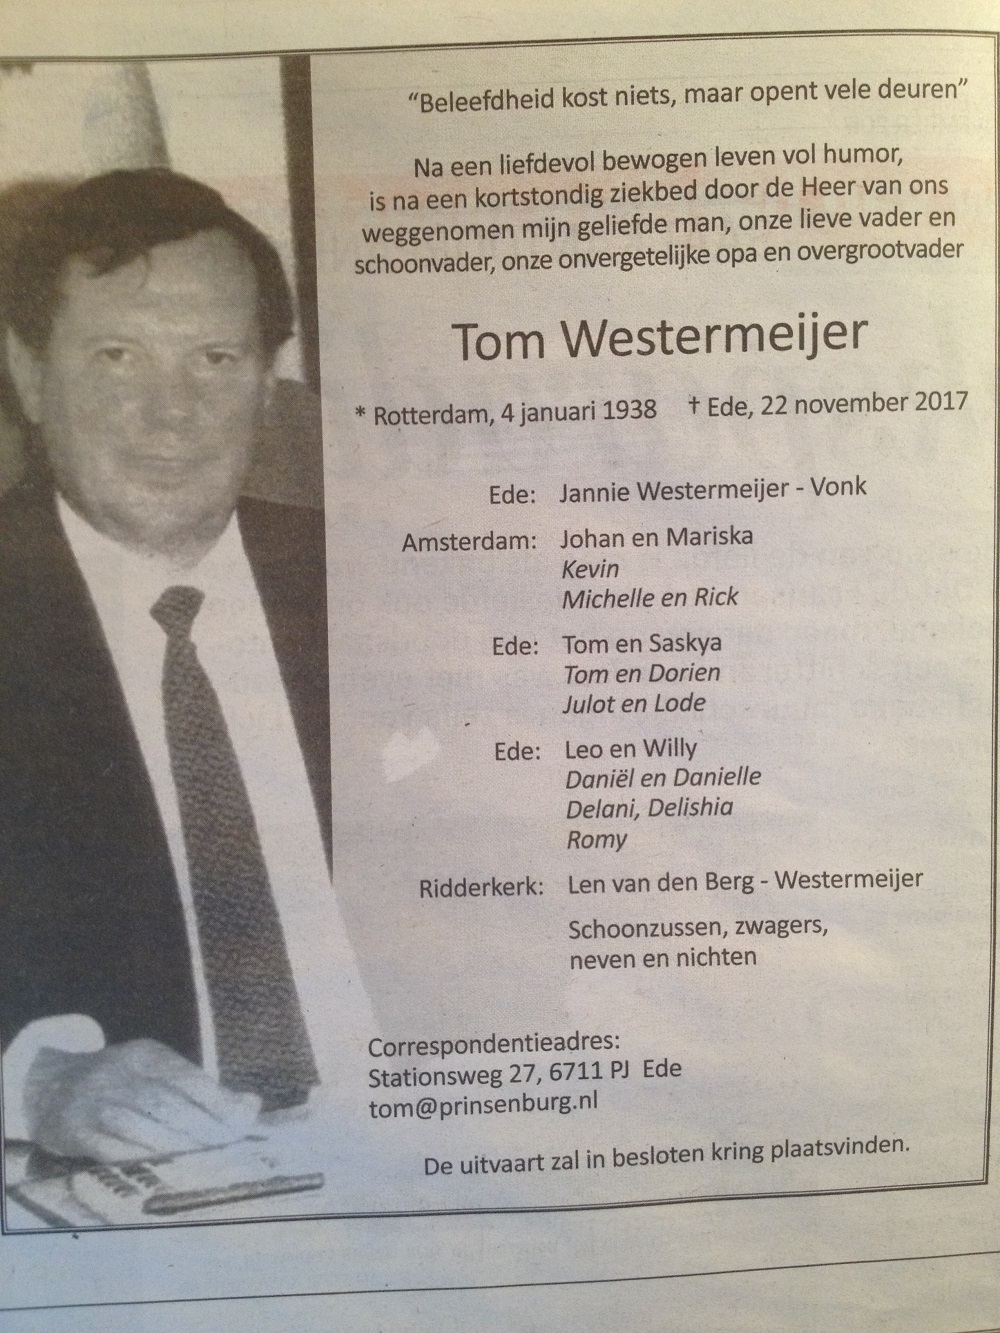 Tom Westermeijer death announcement